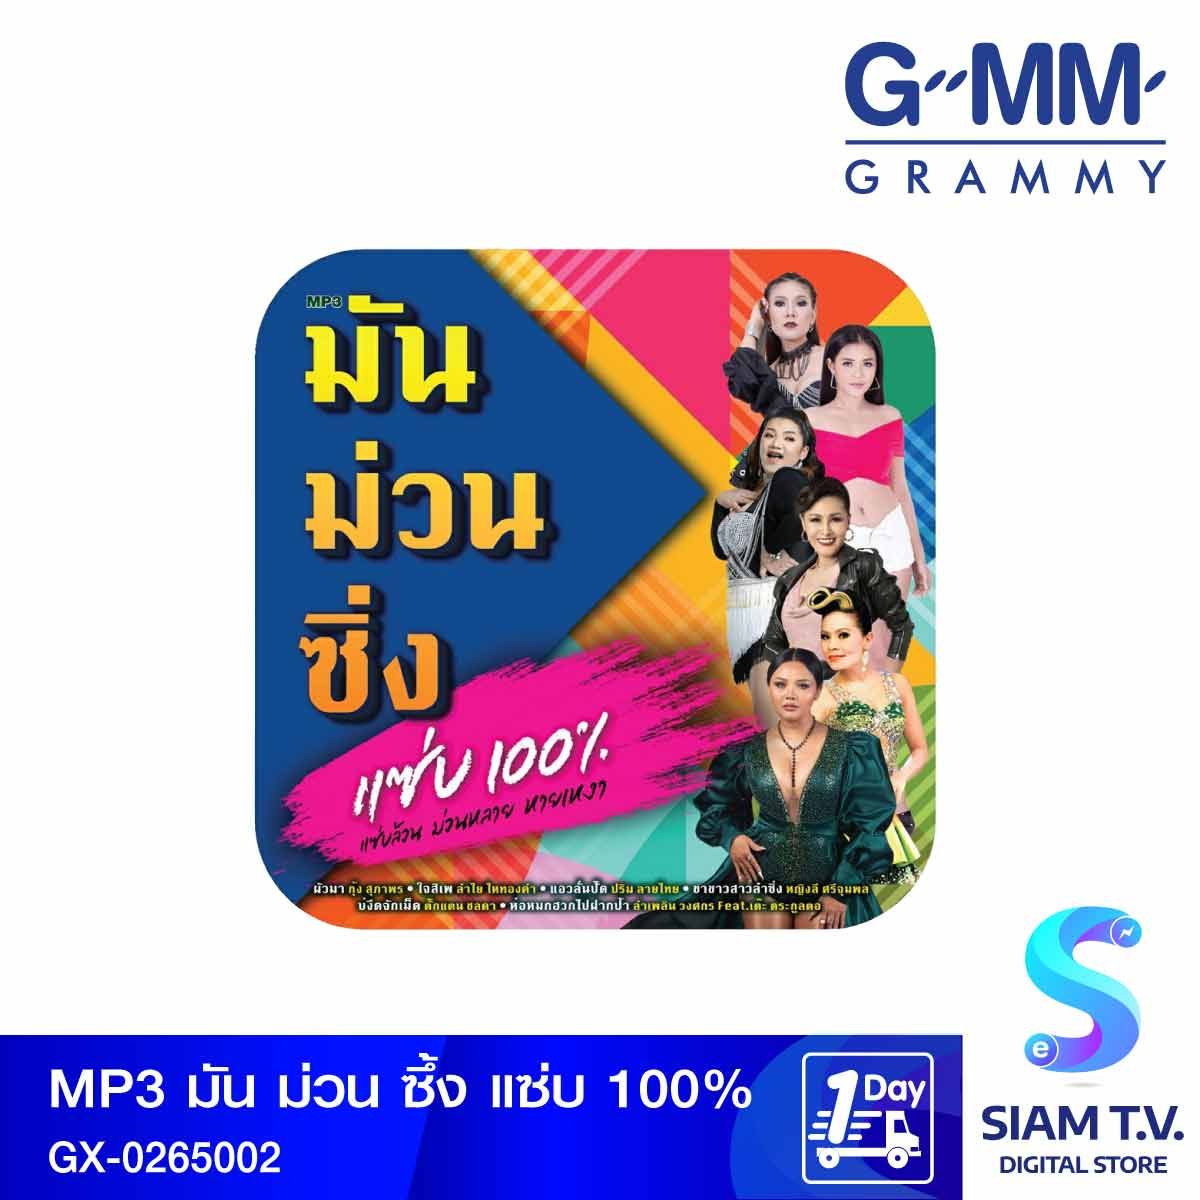 GMM GRAMMY MP3 เพลง มัน ม่วน ซึ้ง แซ่บ100%Branded GX-0265002